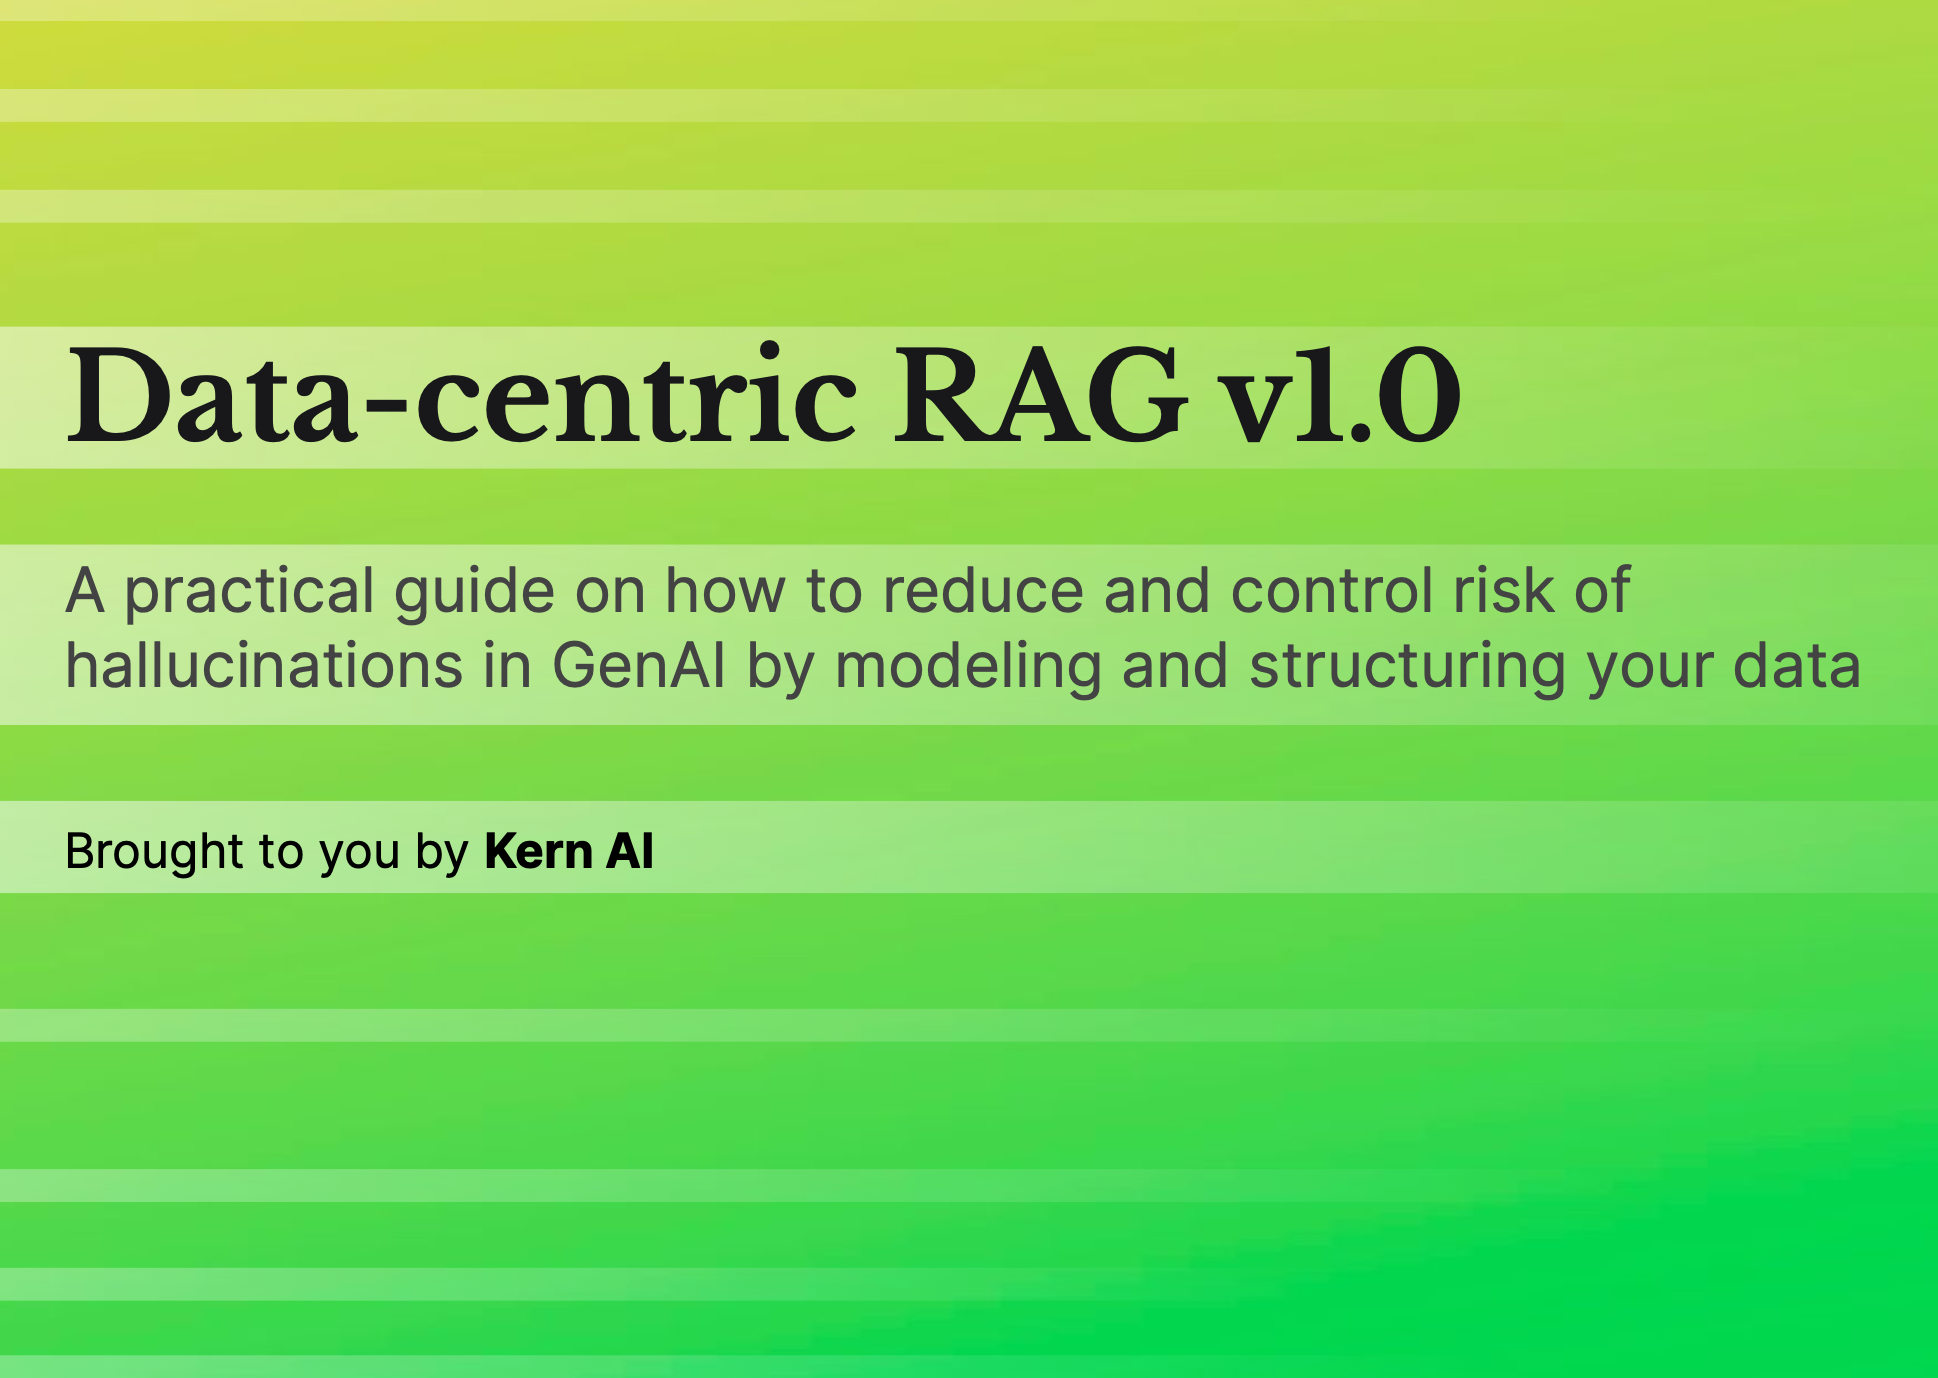 Data-centric RAG Guide